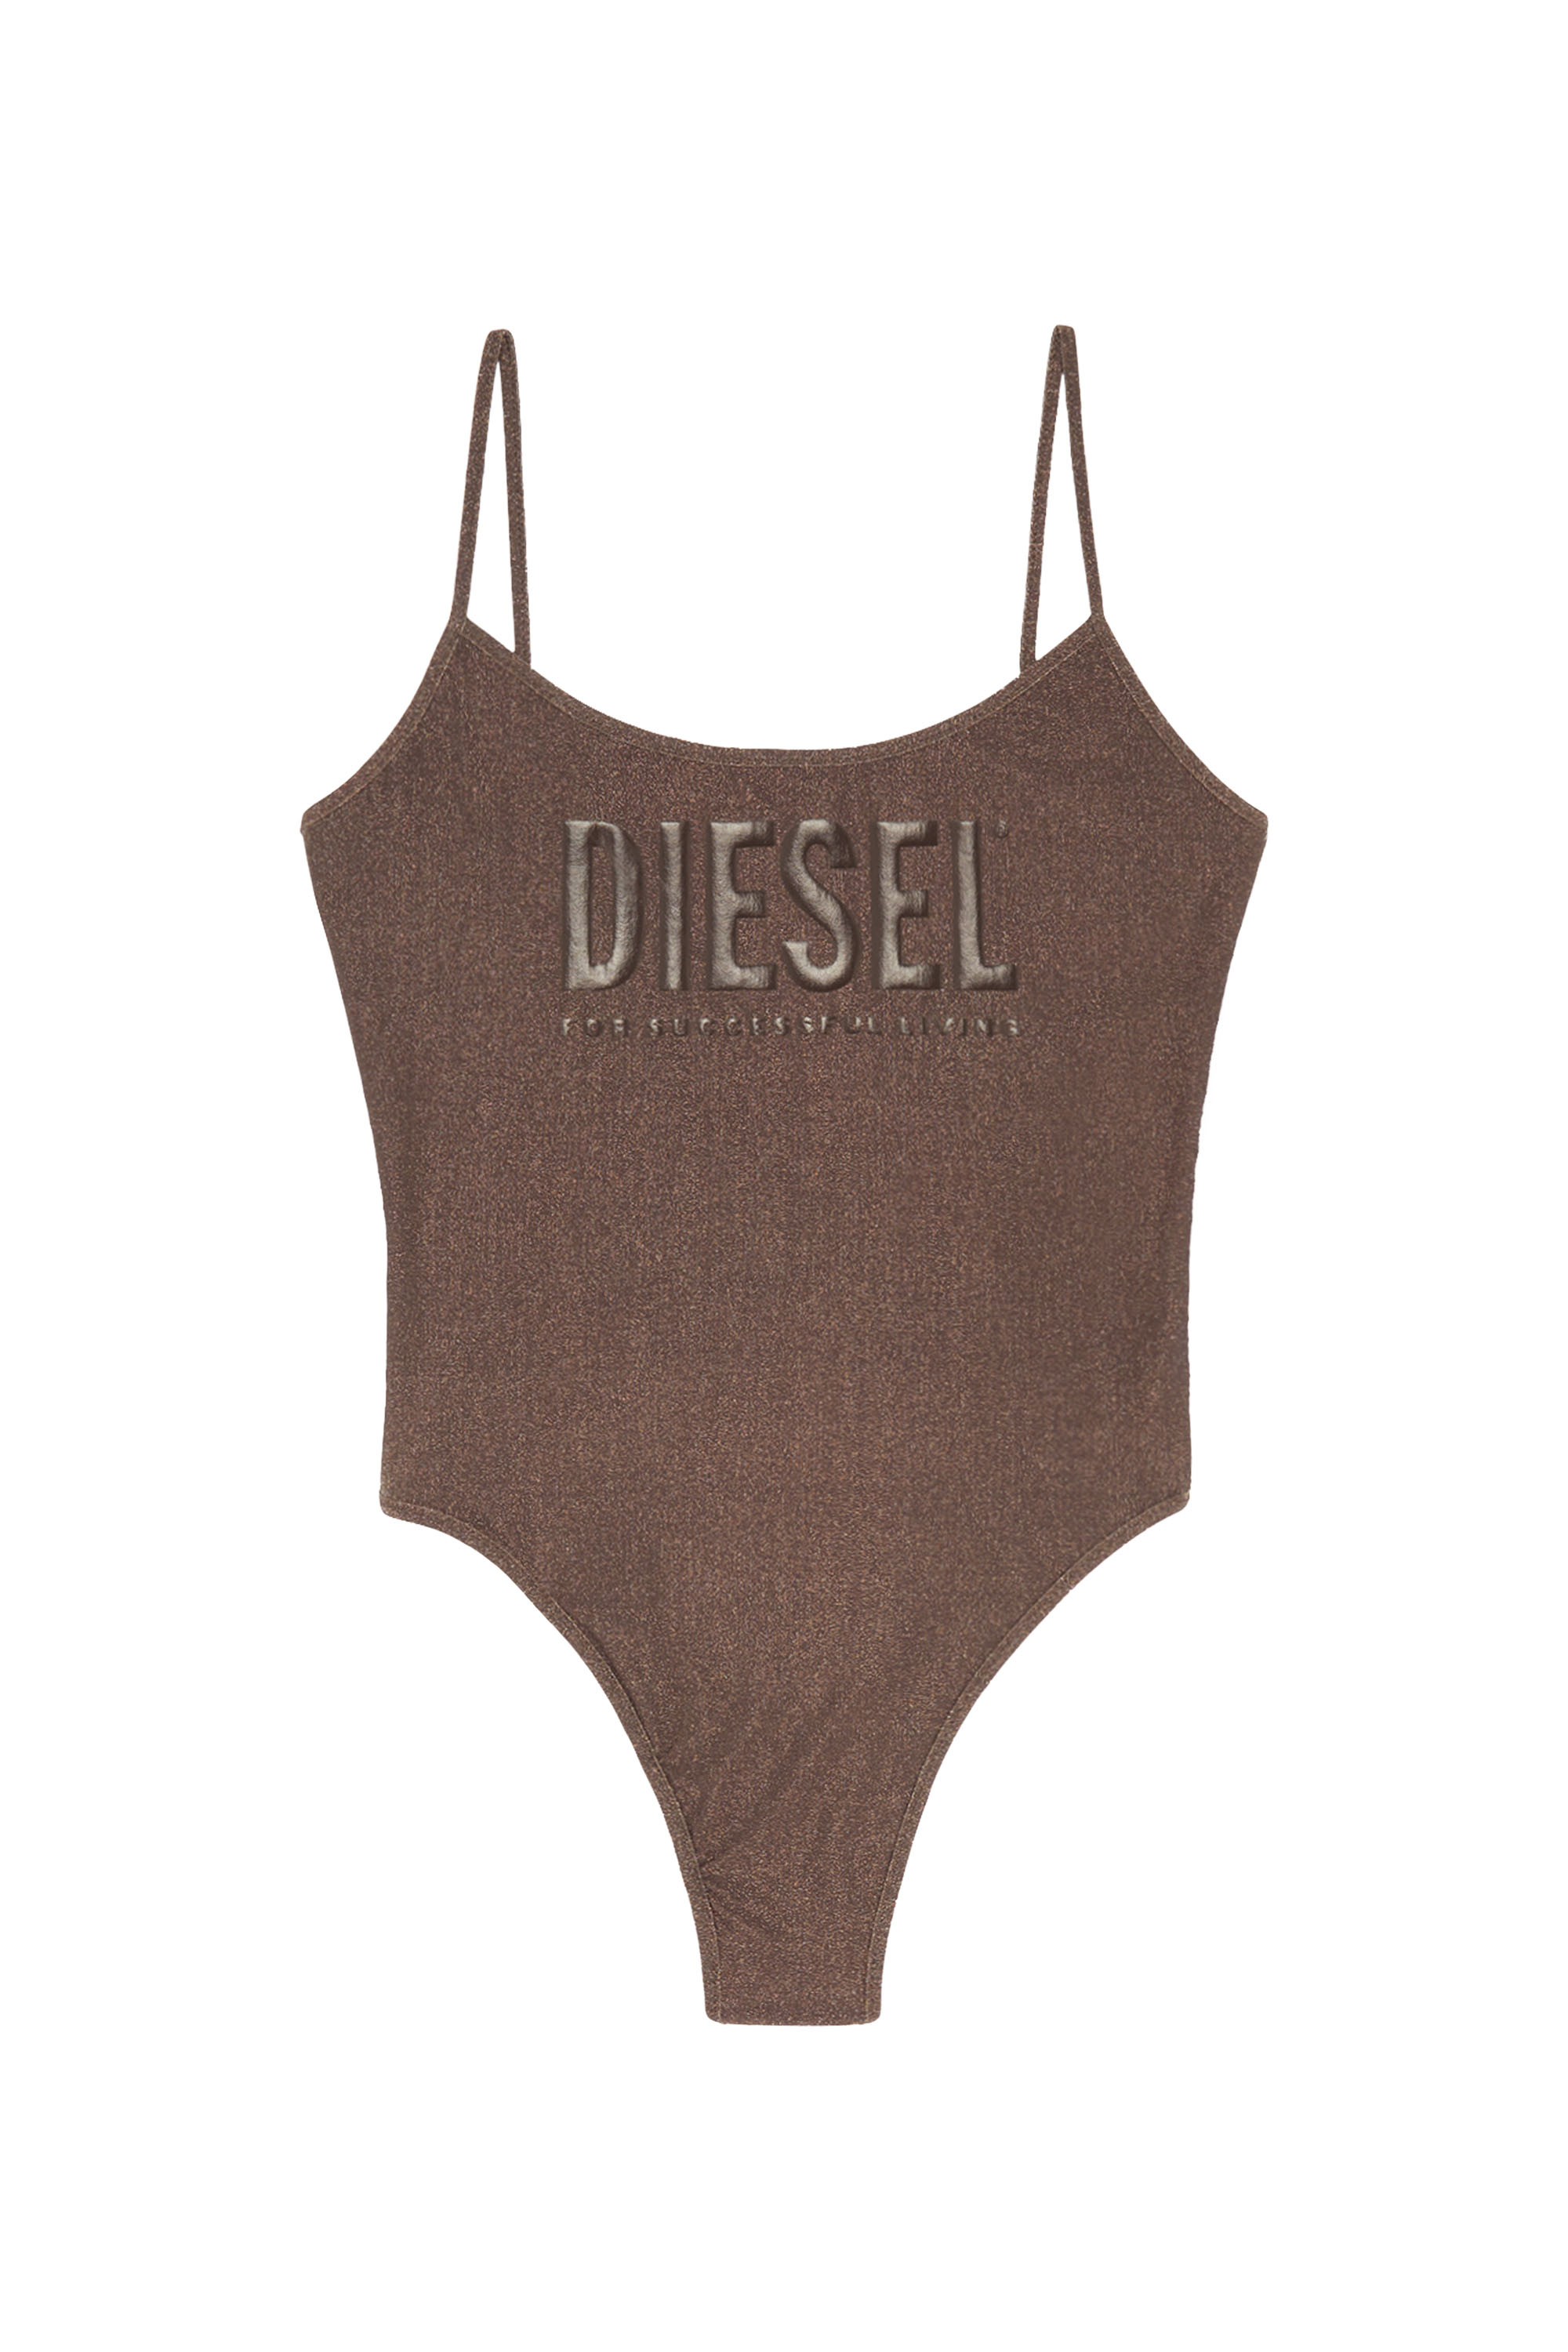 Diesel - BFSW-GRETEL, Brown - Image 3